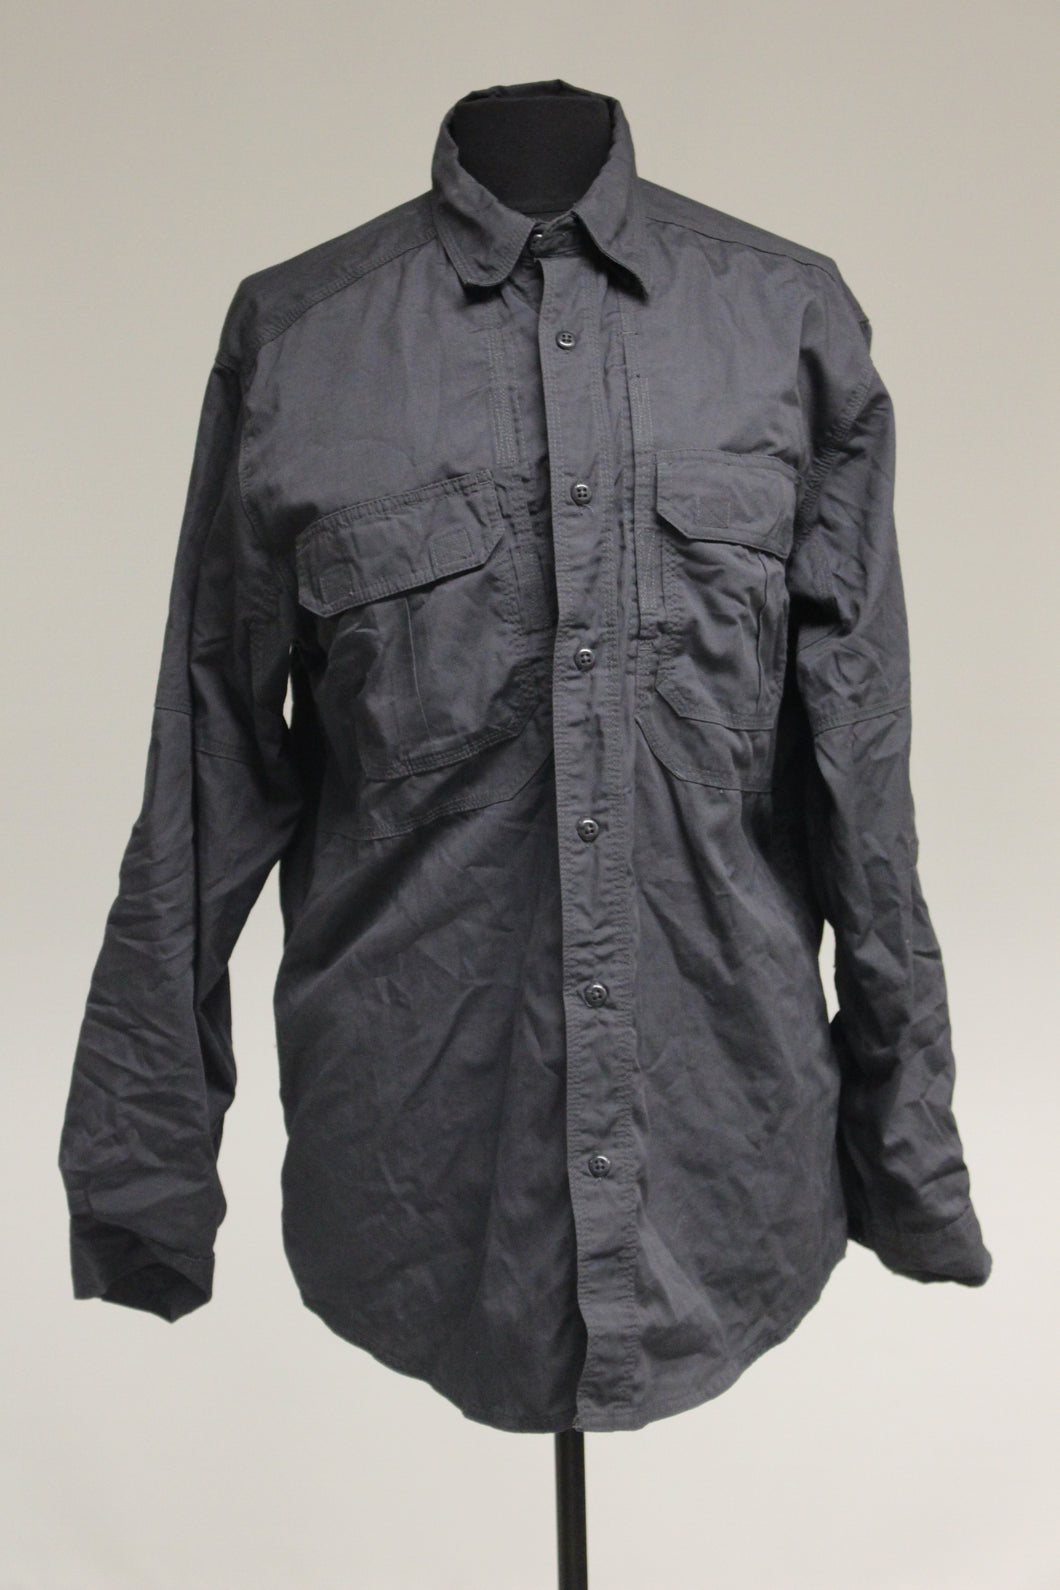 5.11 Taclite Pro Long Sleeve Shirt, Medium Reg, Black